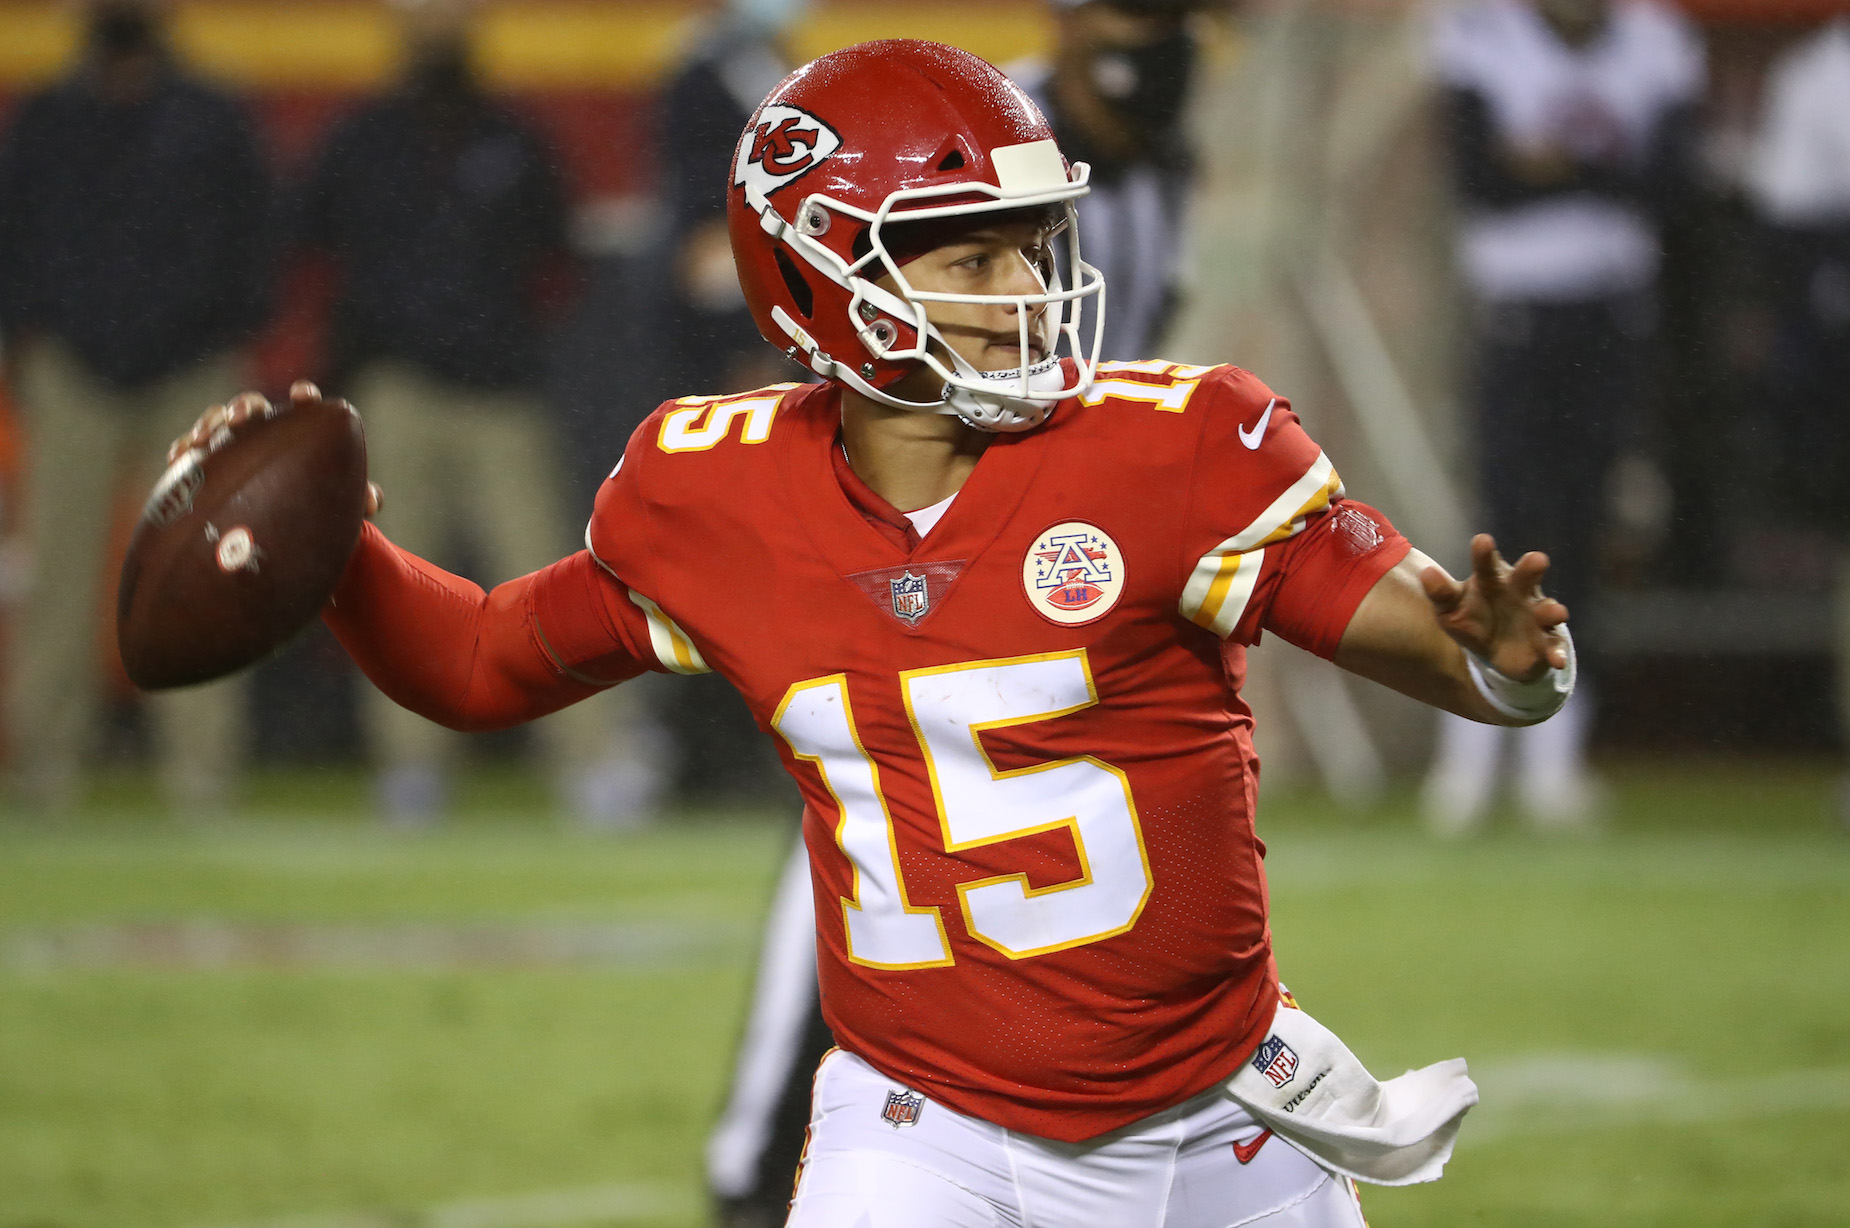 Kansas City Chiefs quarterback Patrick Mahomes could make NFL analytics fans' dreams come true.